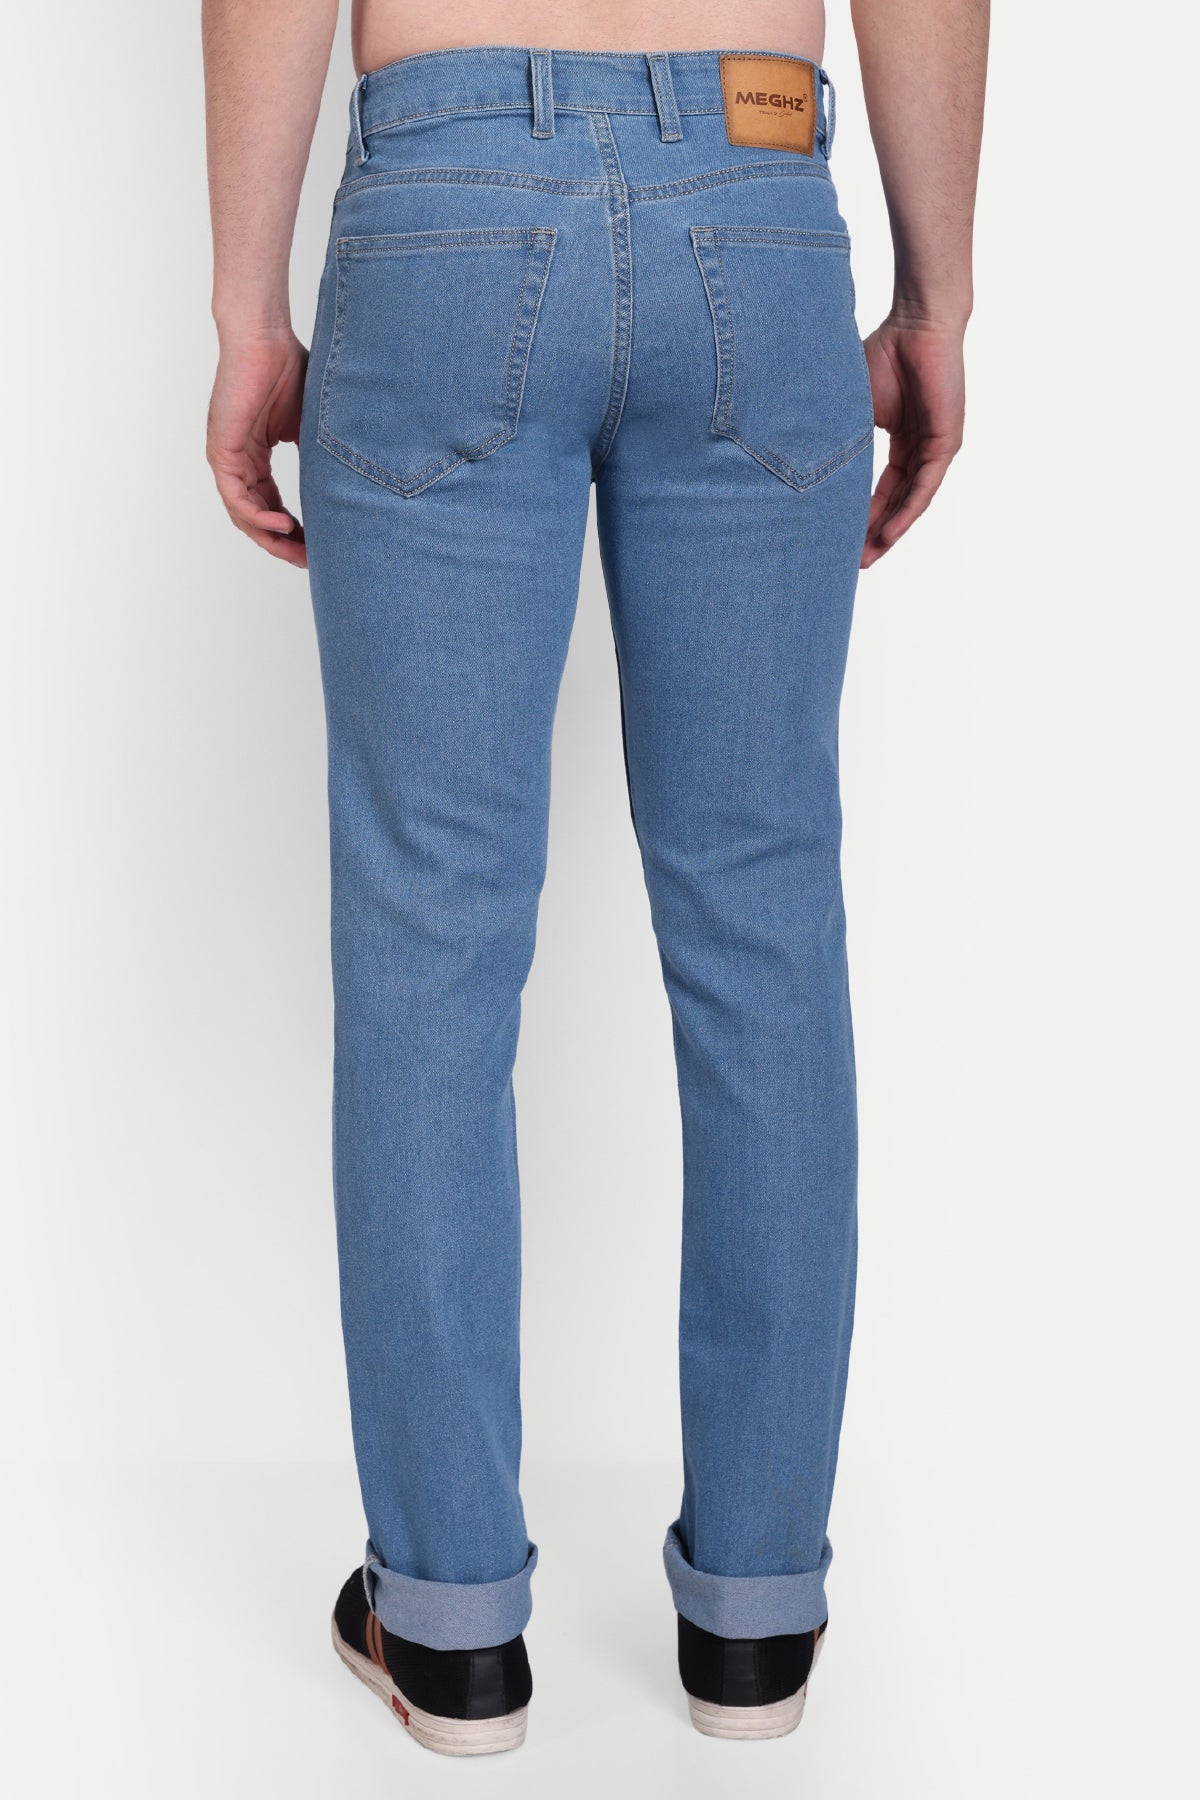 Men's Light Blue Slim Fit Jeans